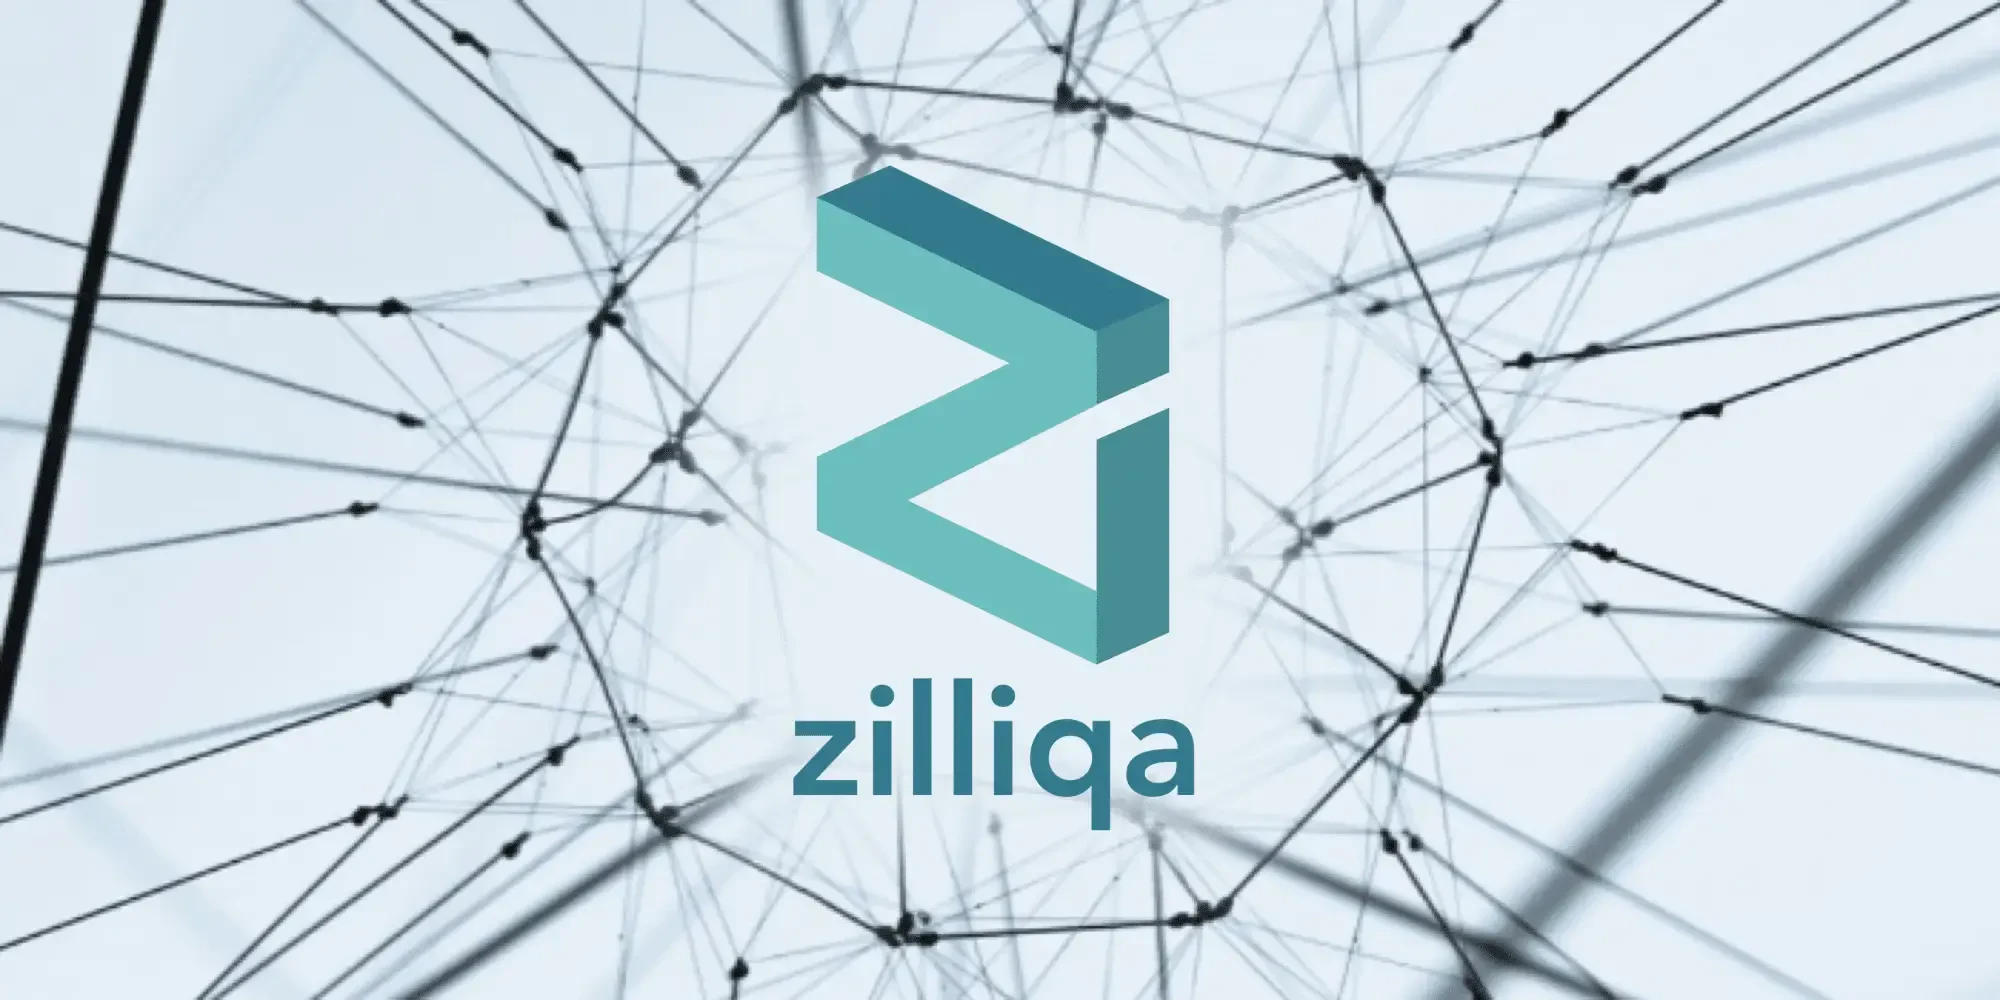 Projet zilliqa noeuds réseaux